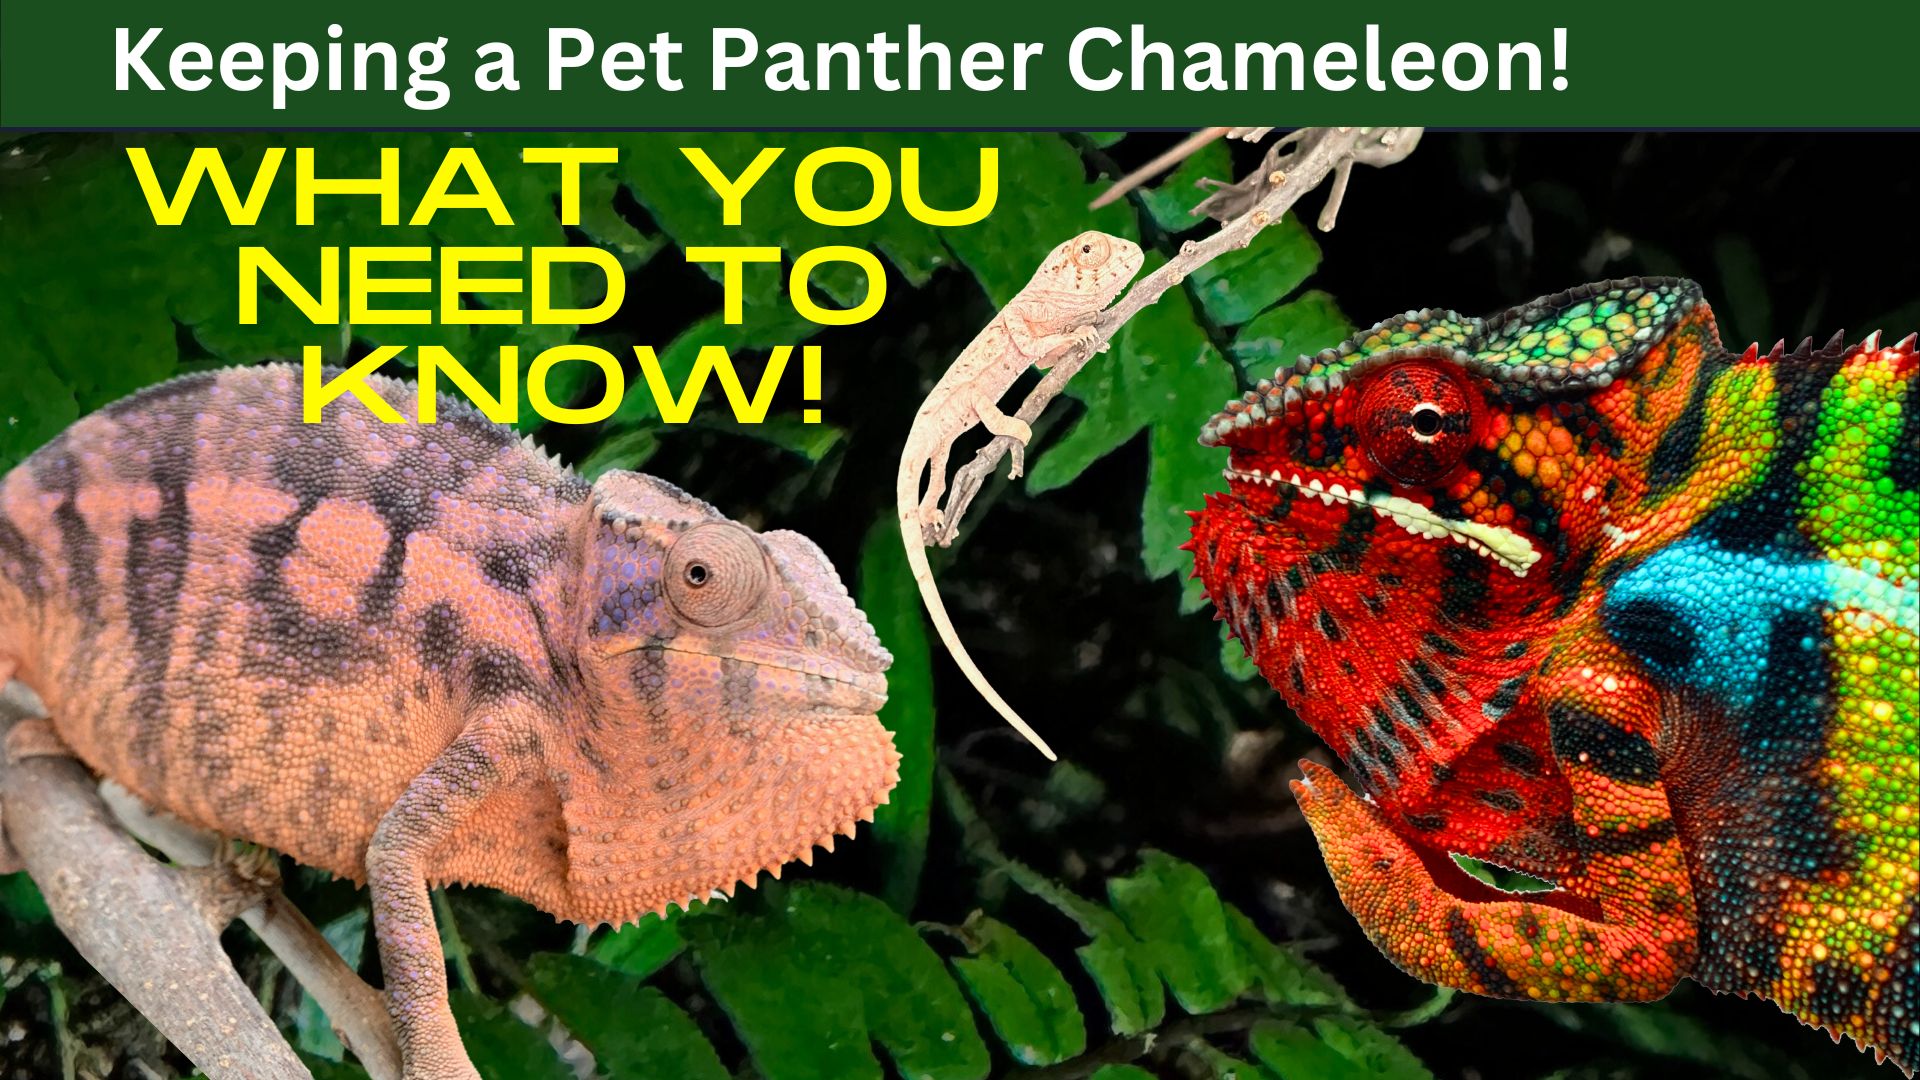 panther chameleons